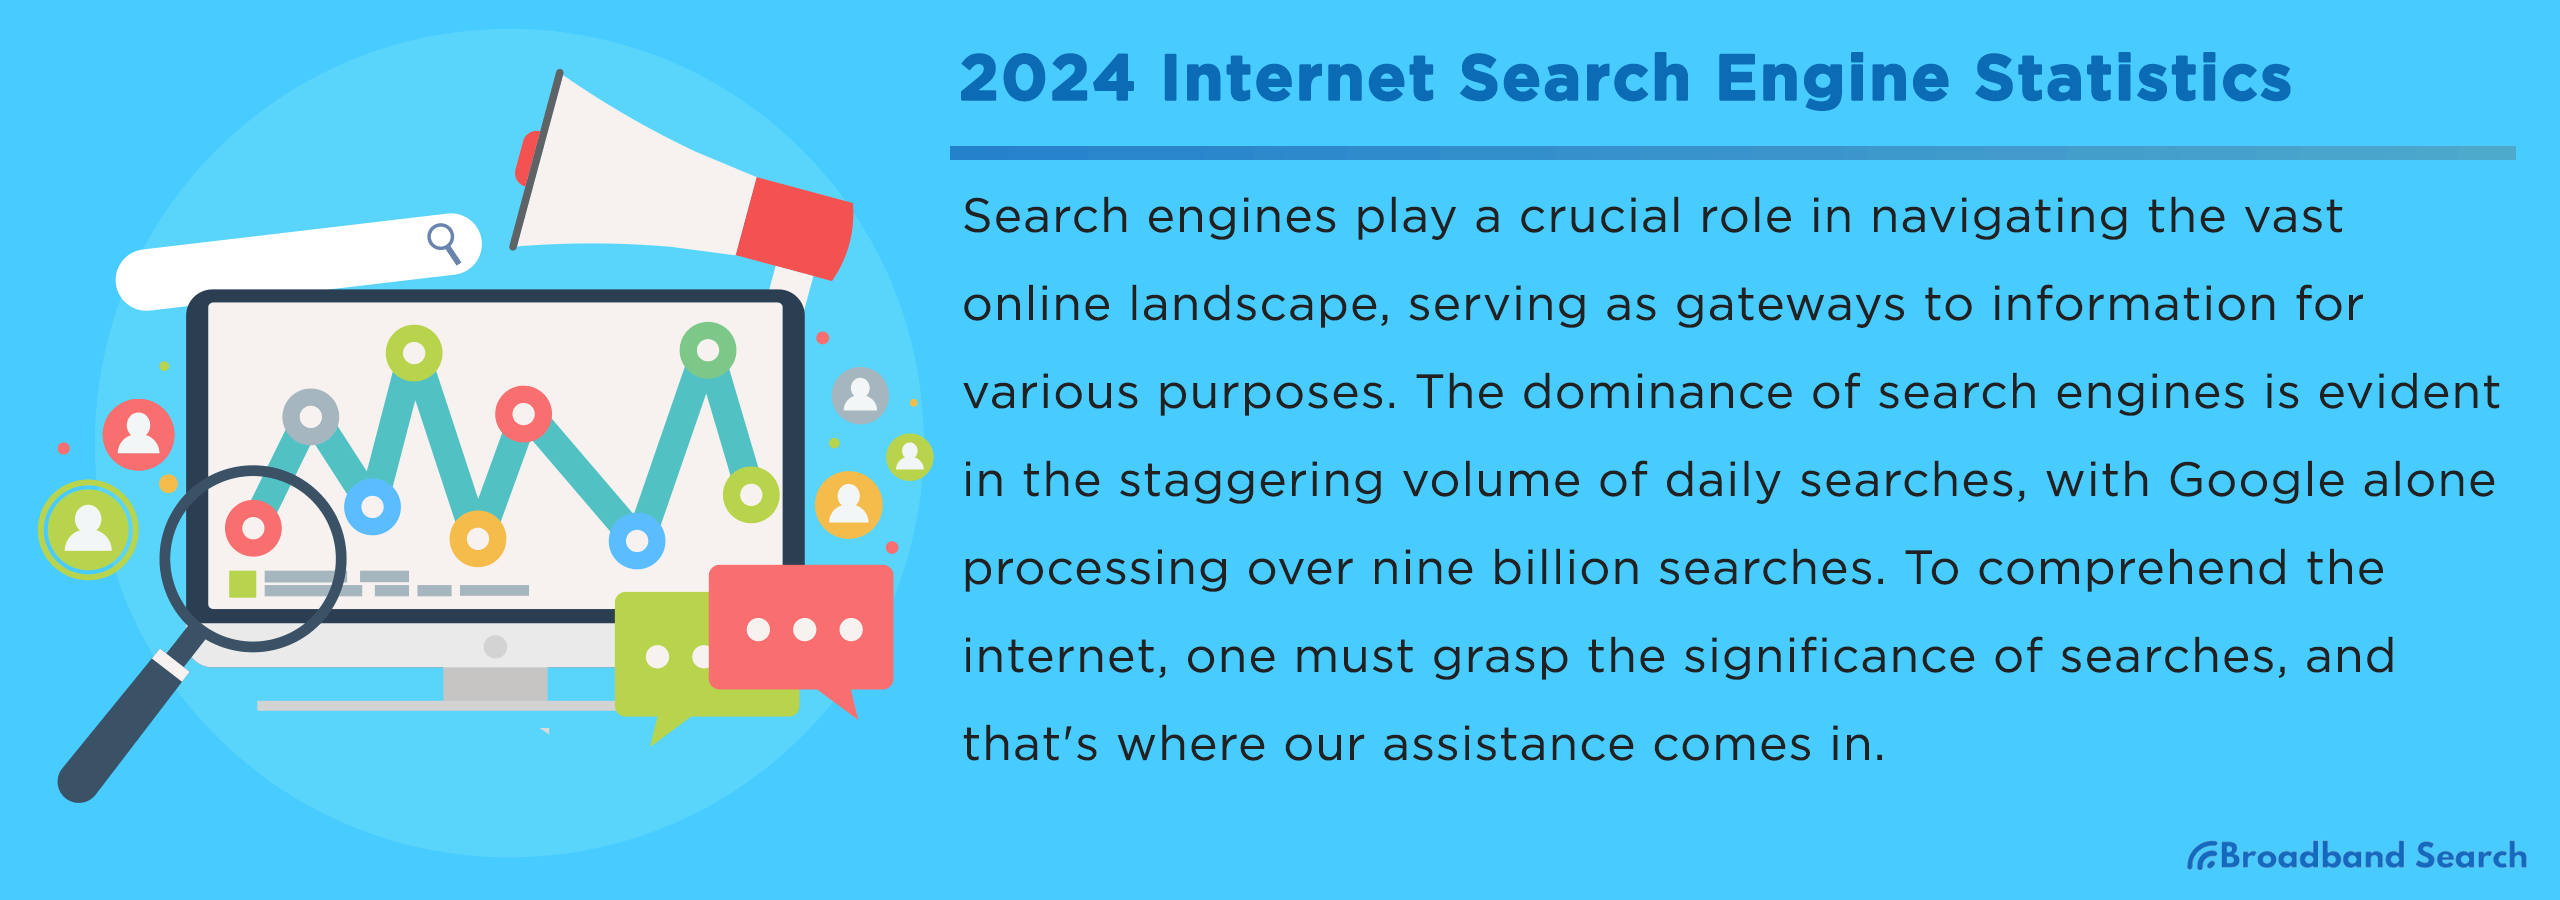 2024 Internet Search Engine Statistics